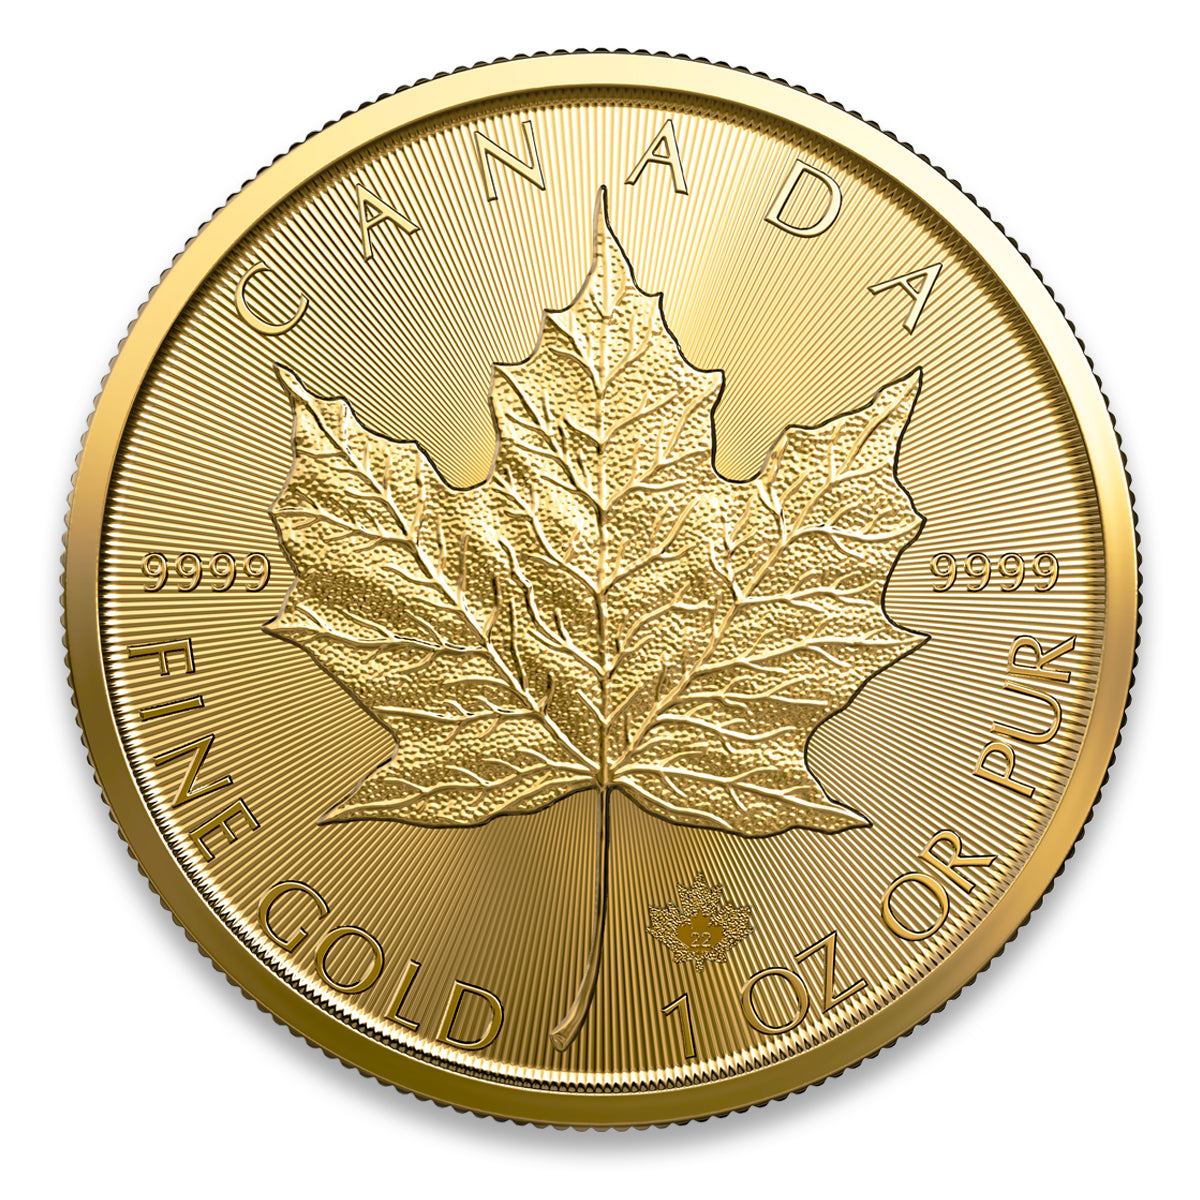 1 oz Maple Leaf Gold Coin